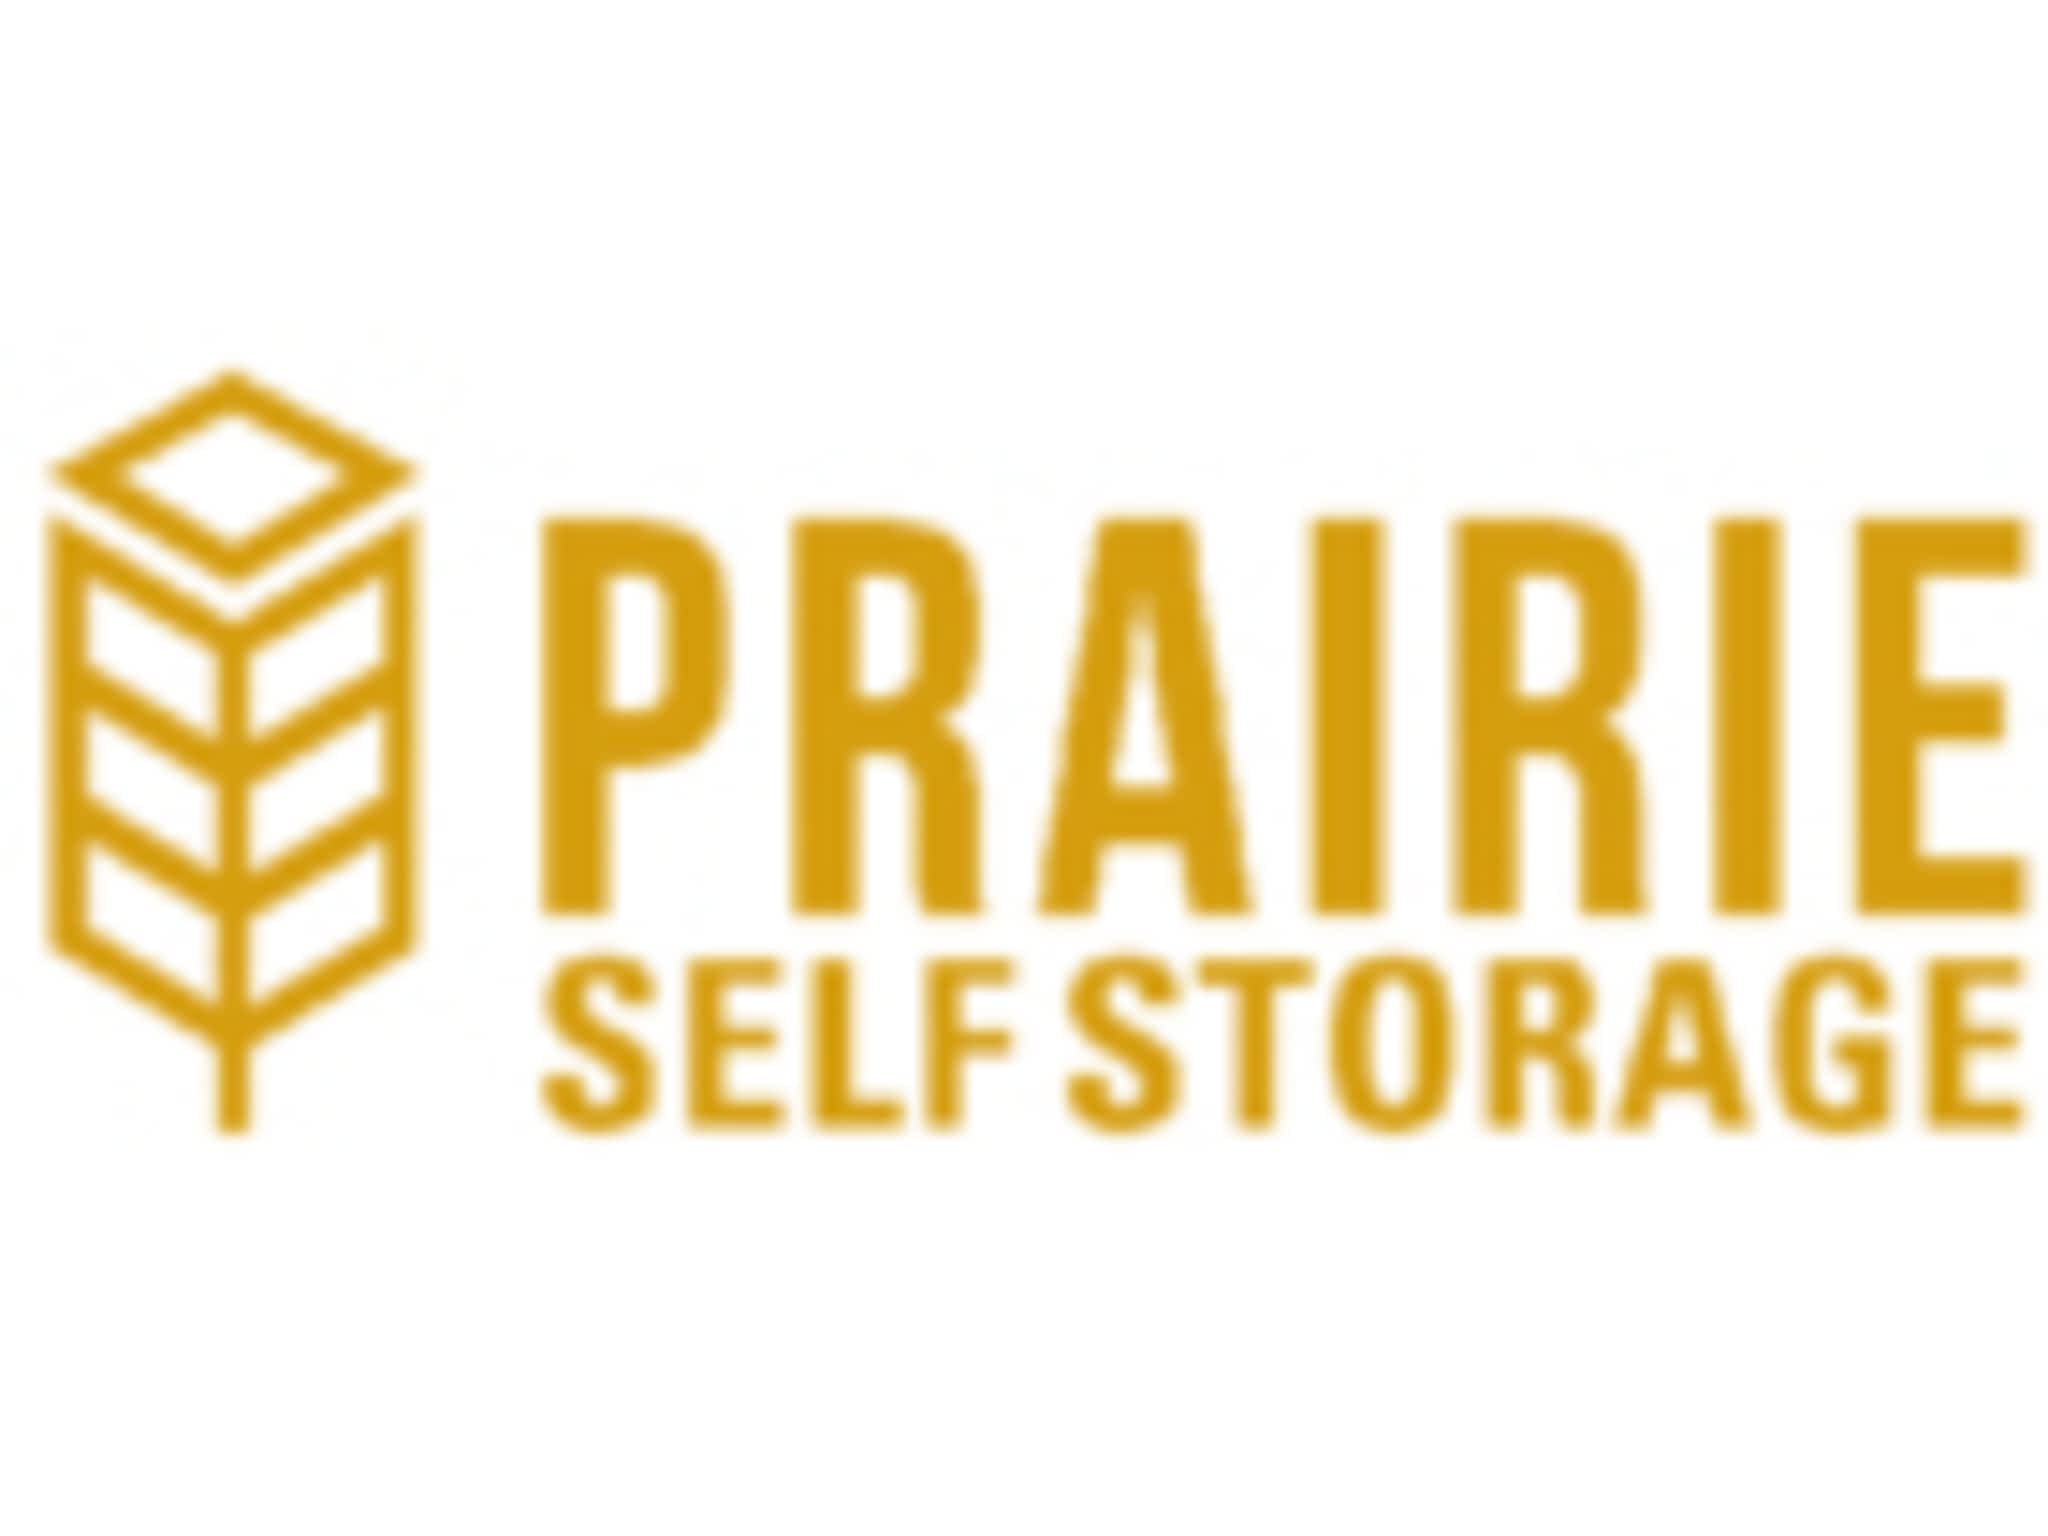 photo Prairie Self Storage Ltd